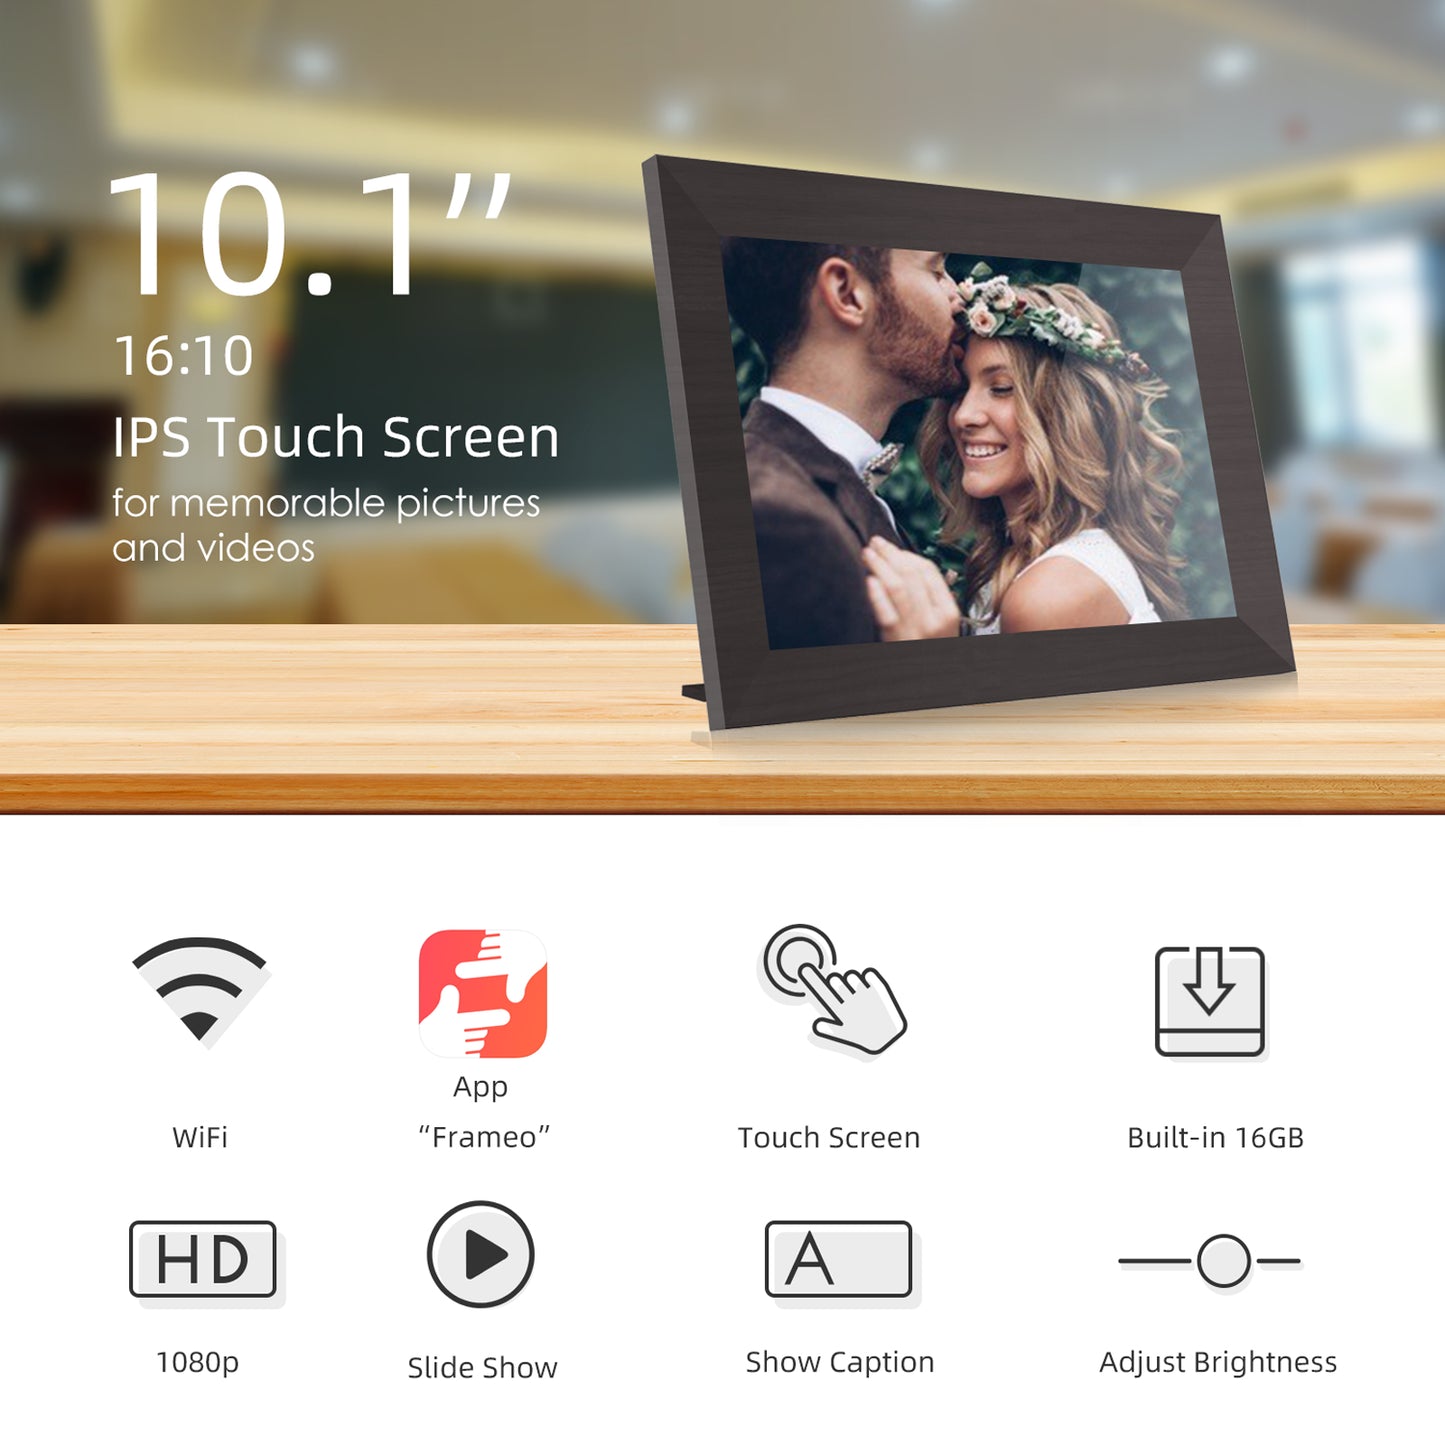 JEEMAK Digital Photo Frame 10.1" WiFi HD IPS Touch Screen Smart Photo Frame Easy Setup to Share Video Clips & Photos Wall Mountable Auto-Rotate Wood Grain Color